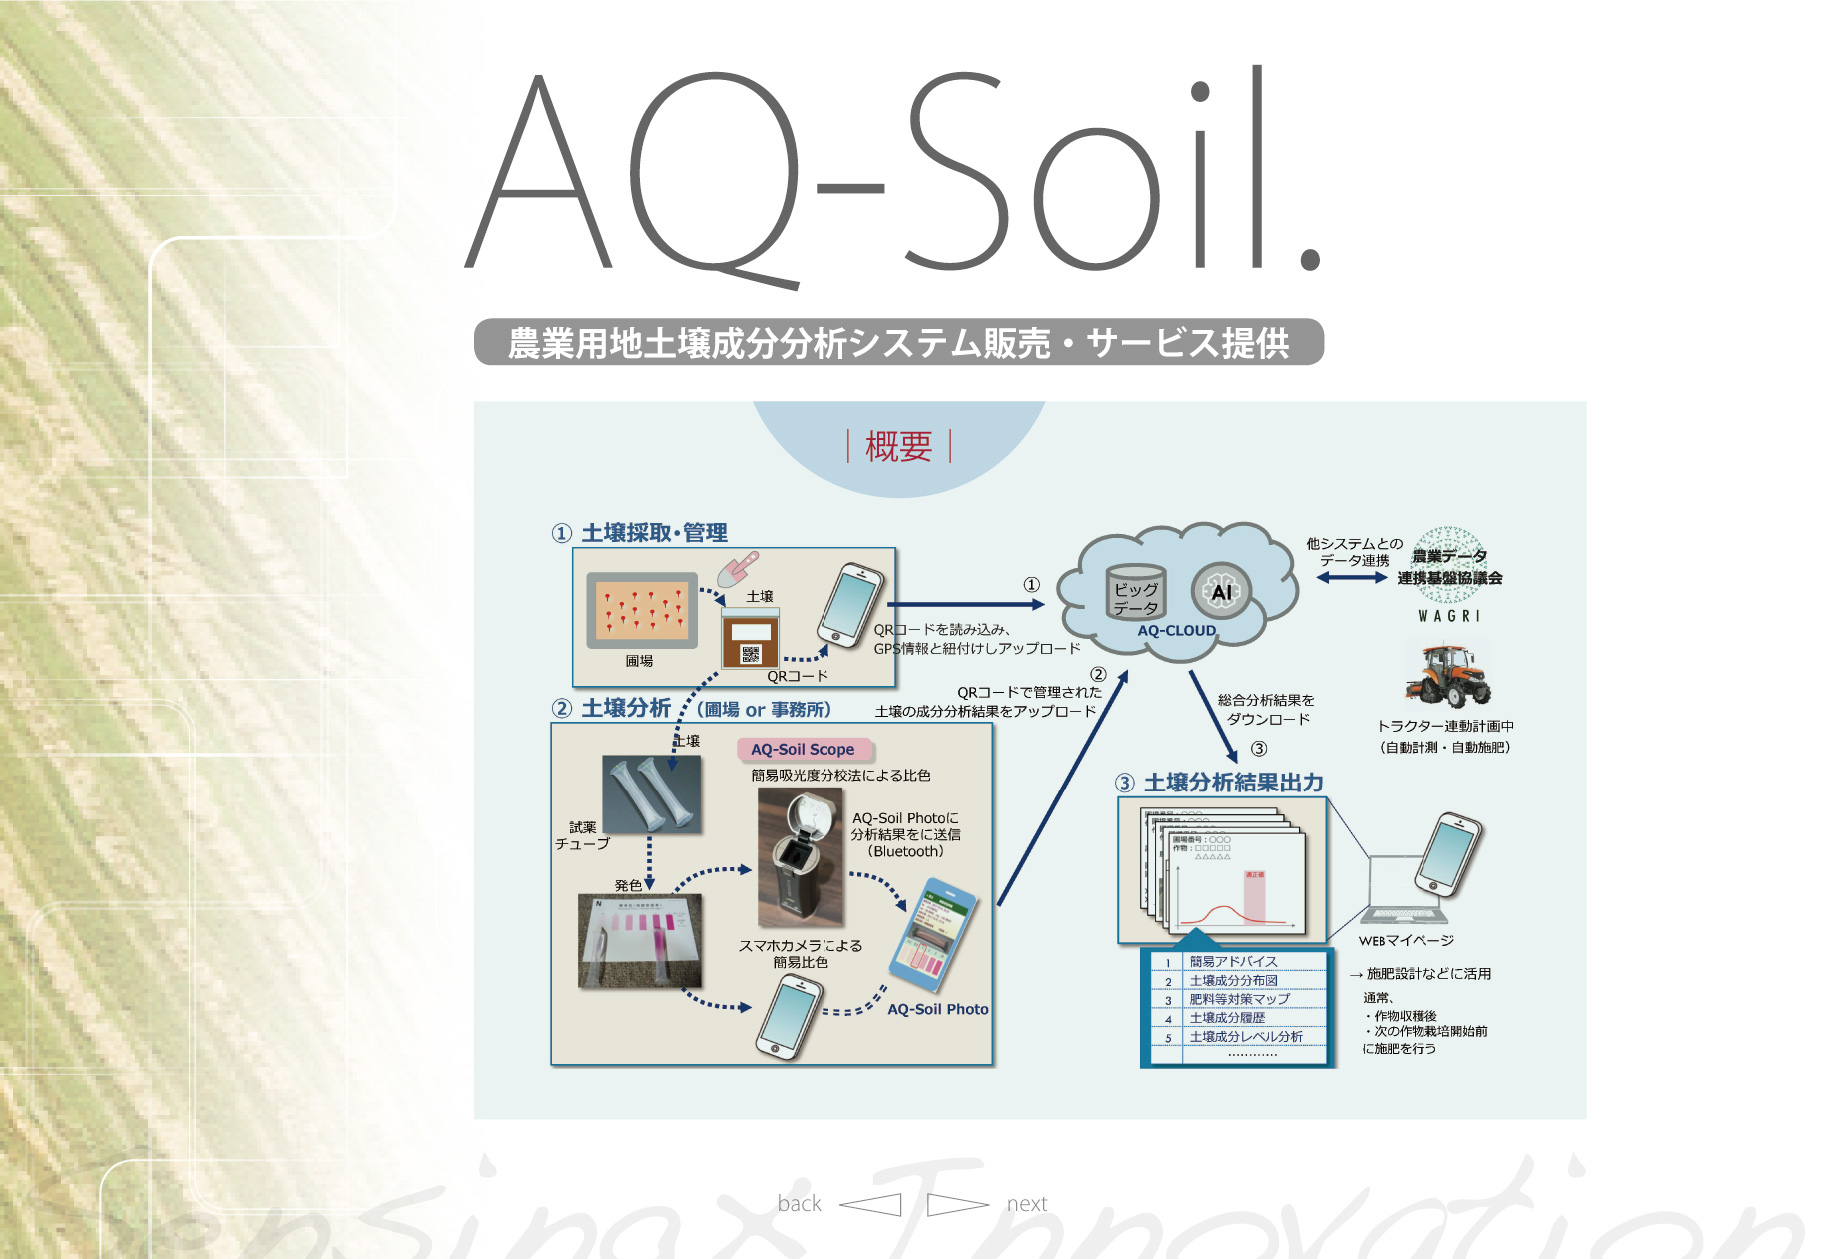 AQ-Soil 農業用地土壌成分分析システム販売・サービス提供